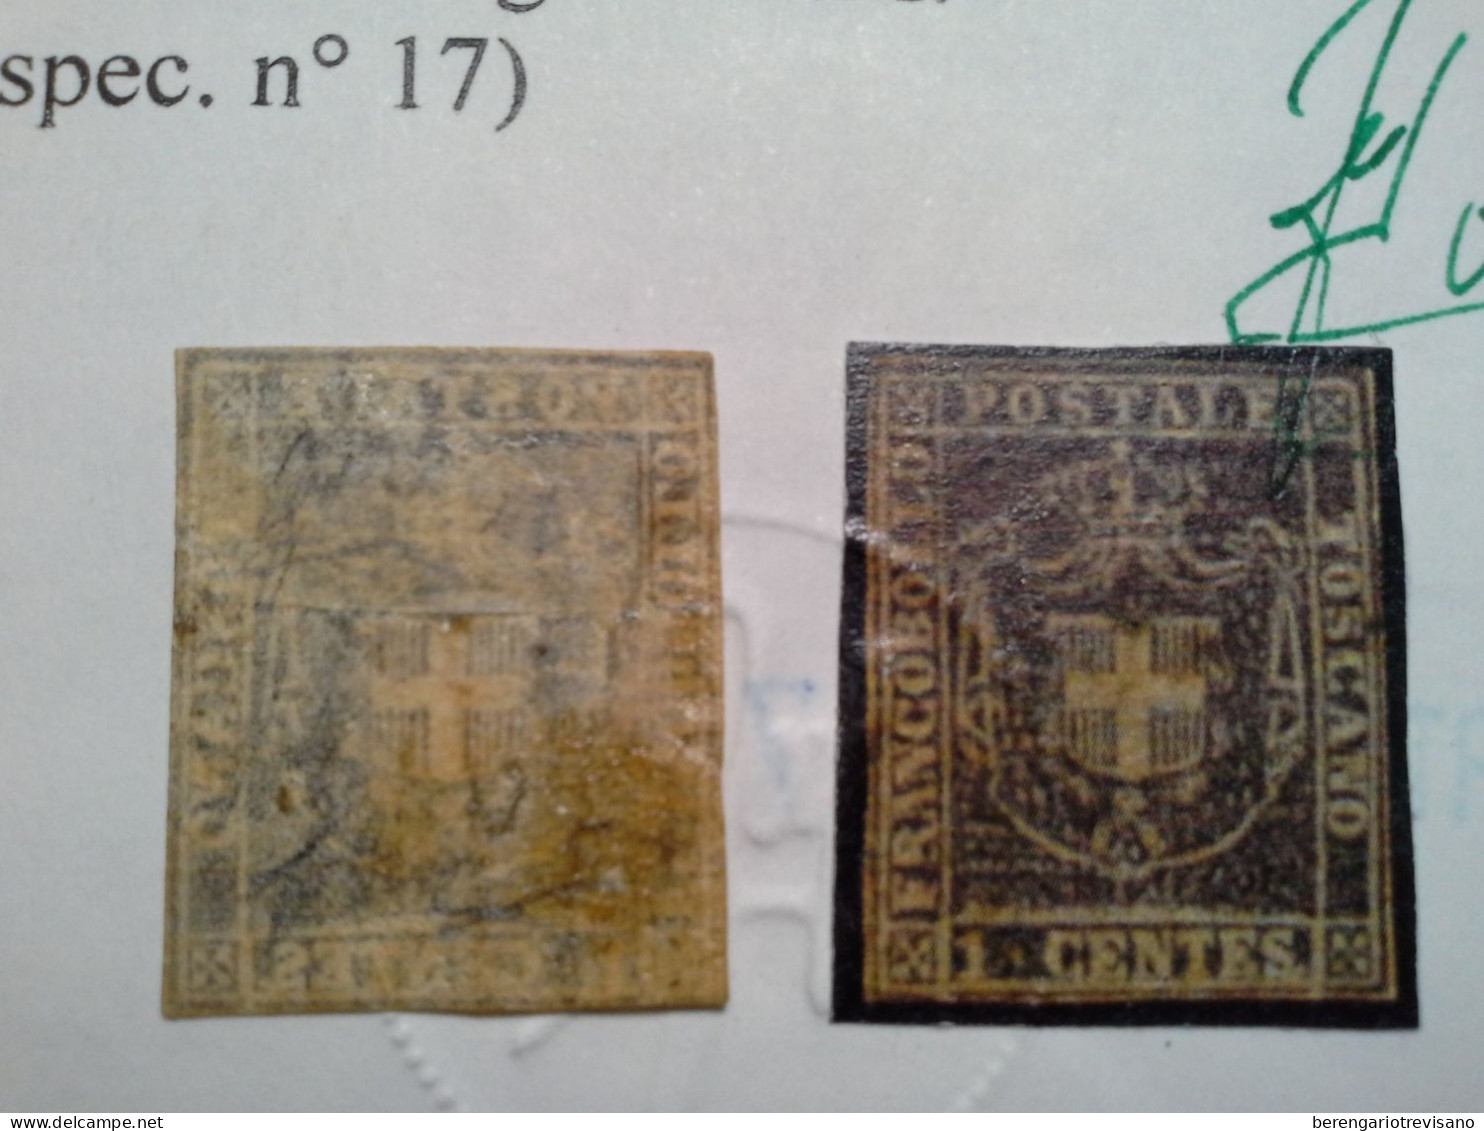 Regno D'Italia 1860 - Toscana 1 Cent. Marrone Violaceo Raro - 2 Certificati - Toscane